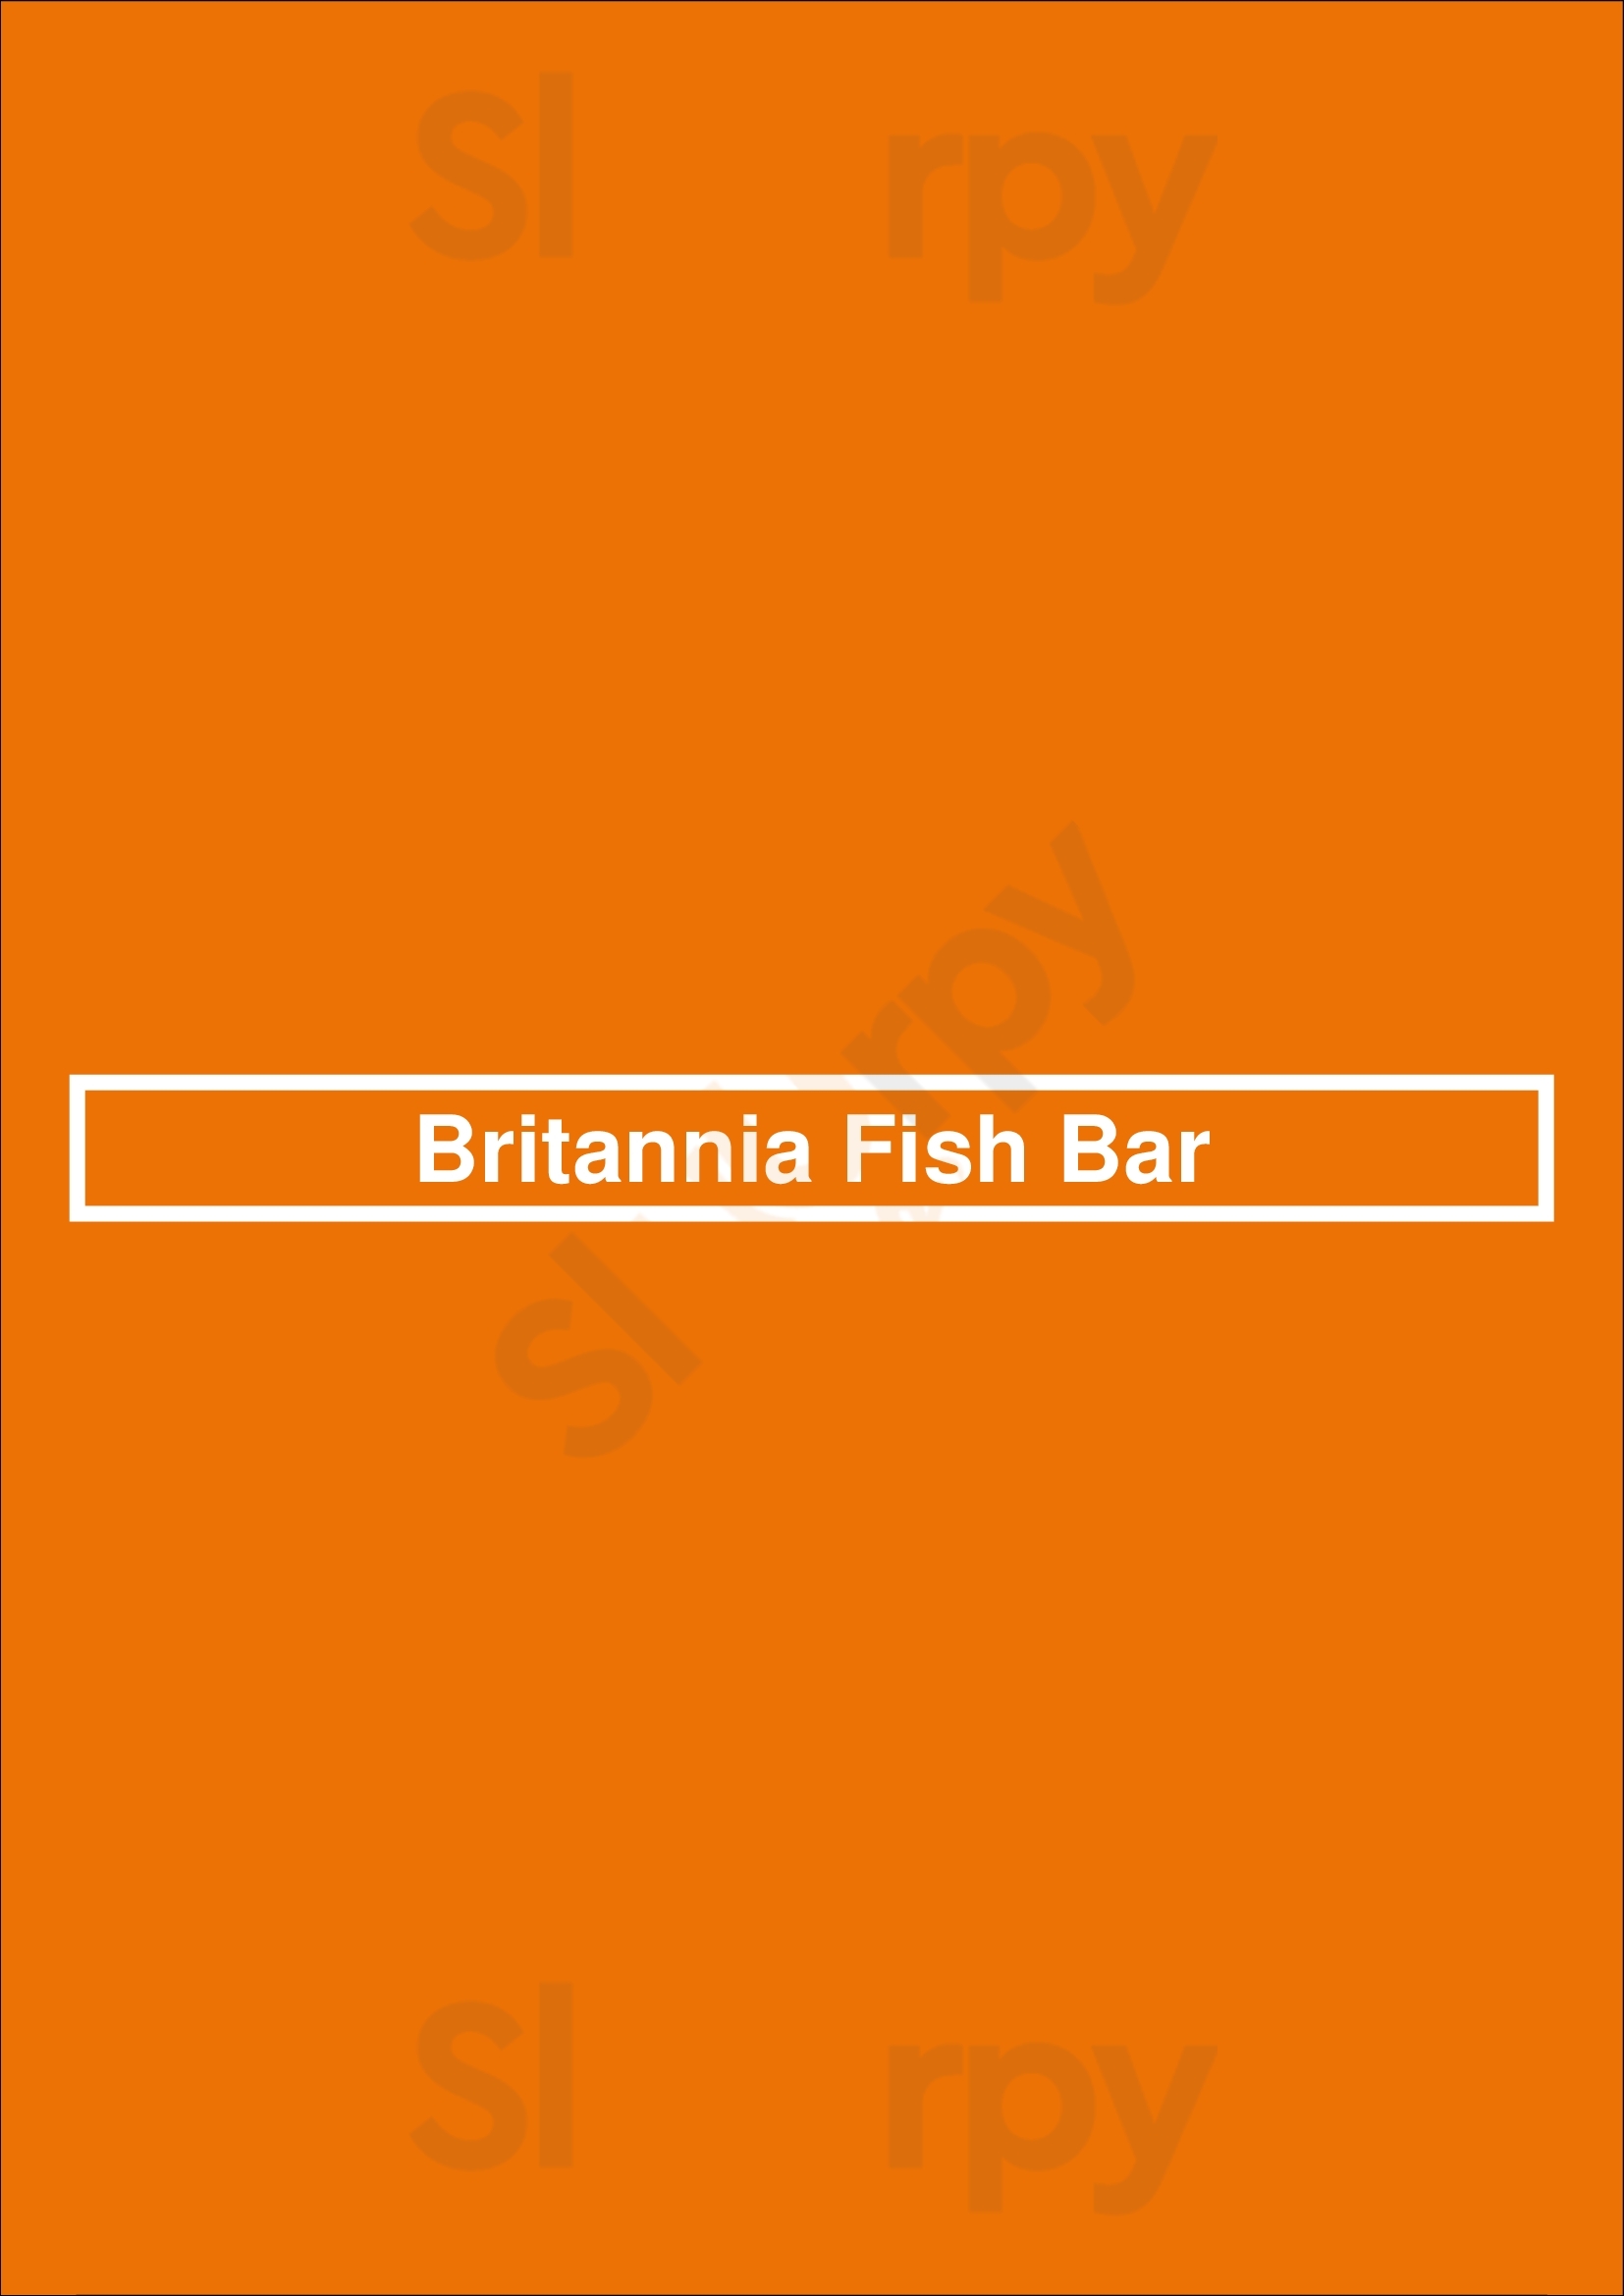 Britannia Fish Bar London Menu - 1